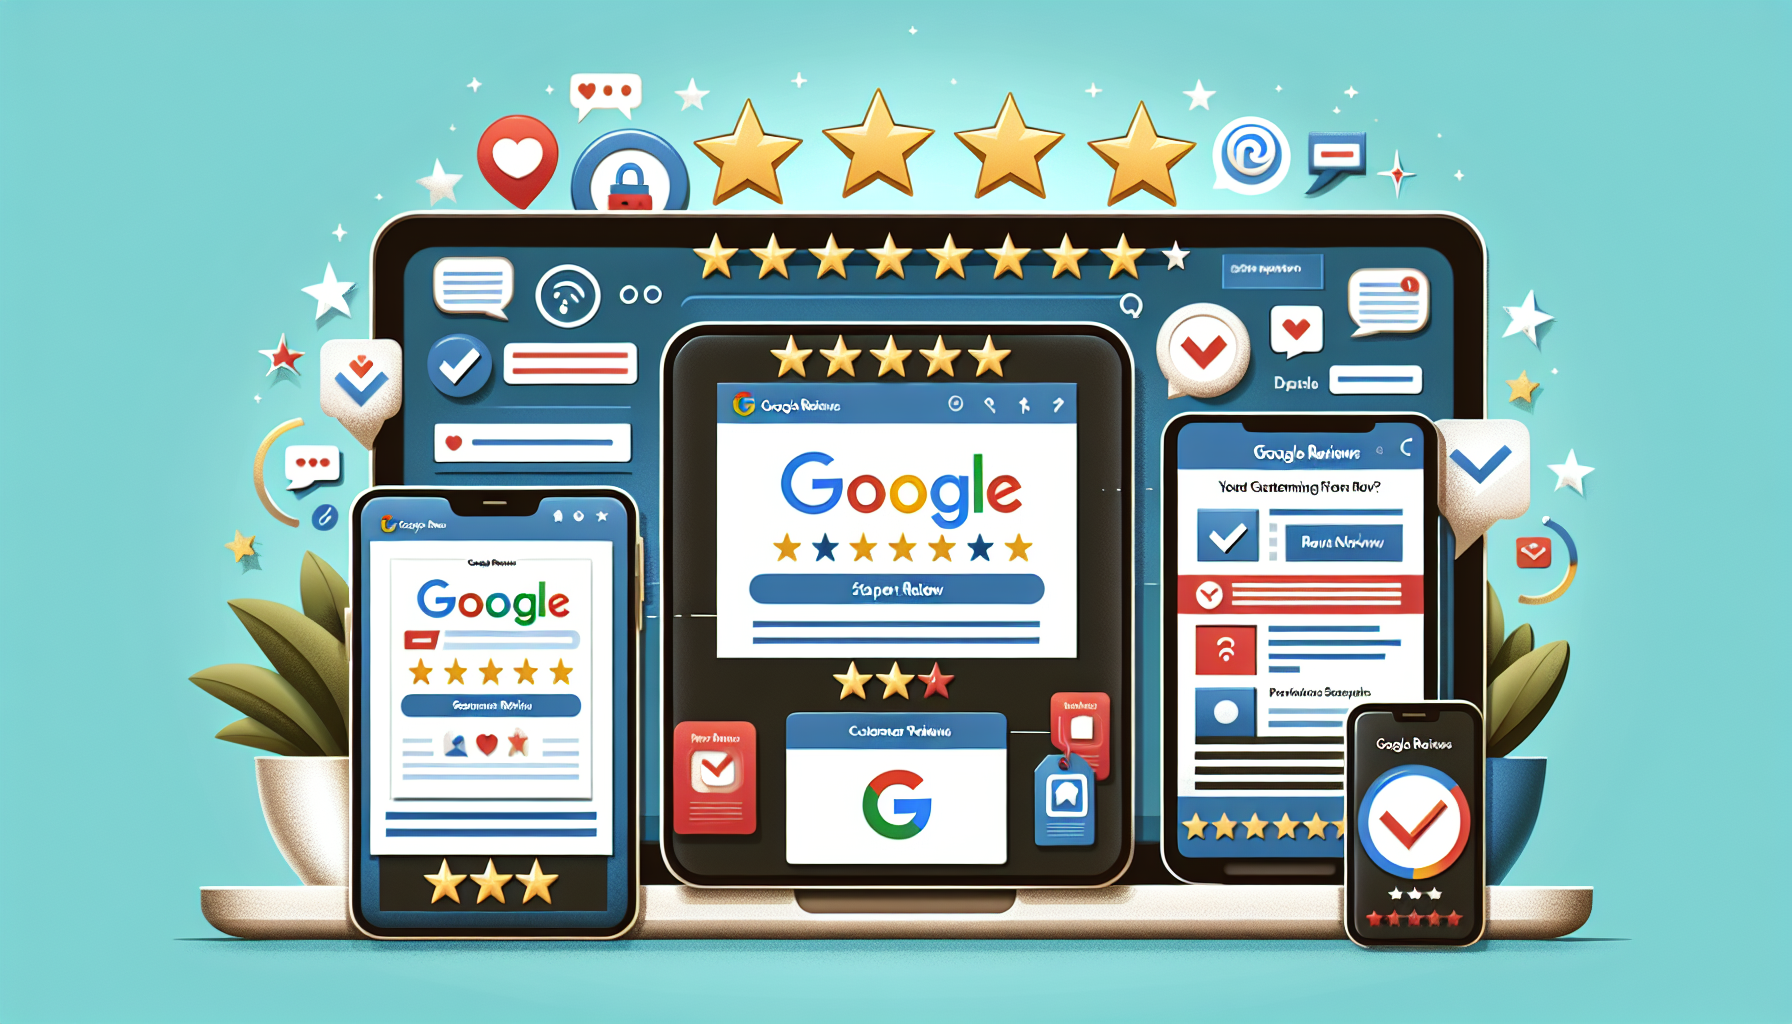 Integrating Google Reviews into marketing strategy